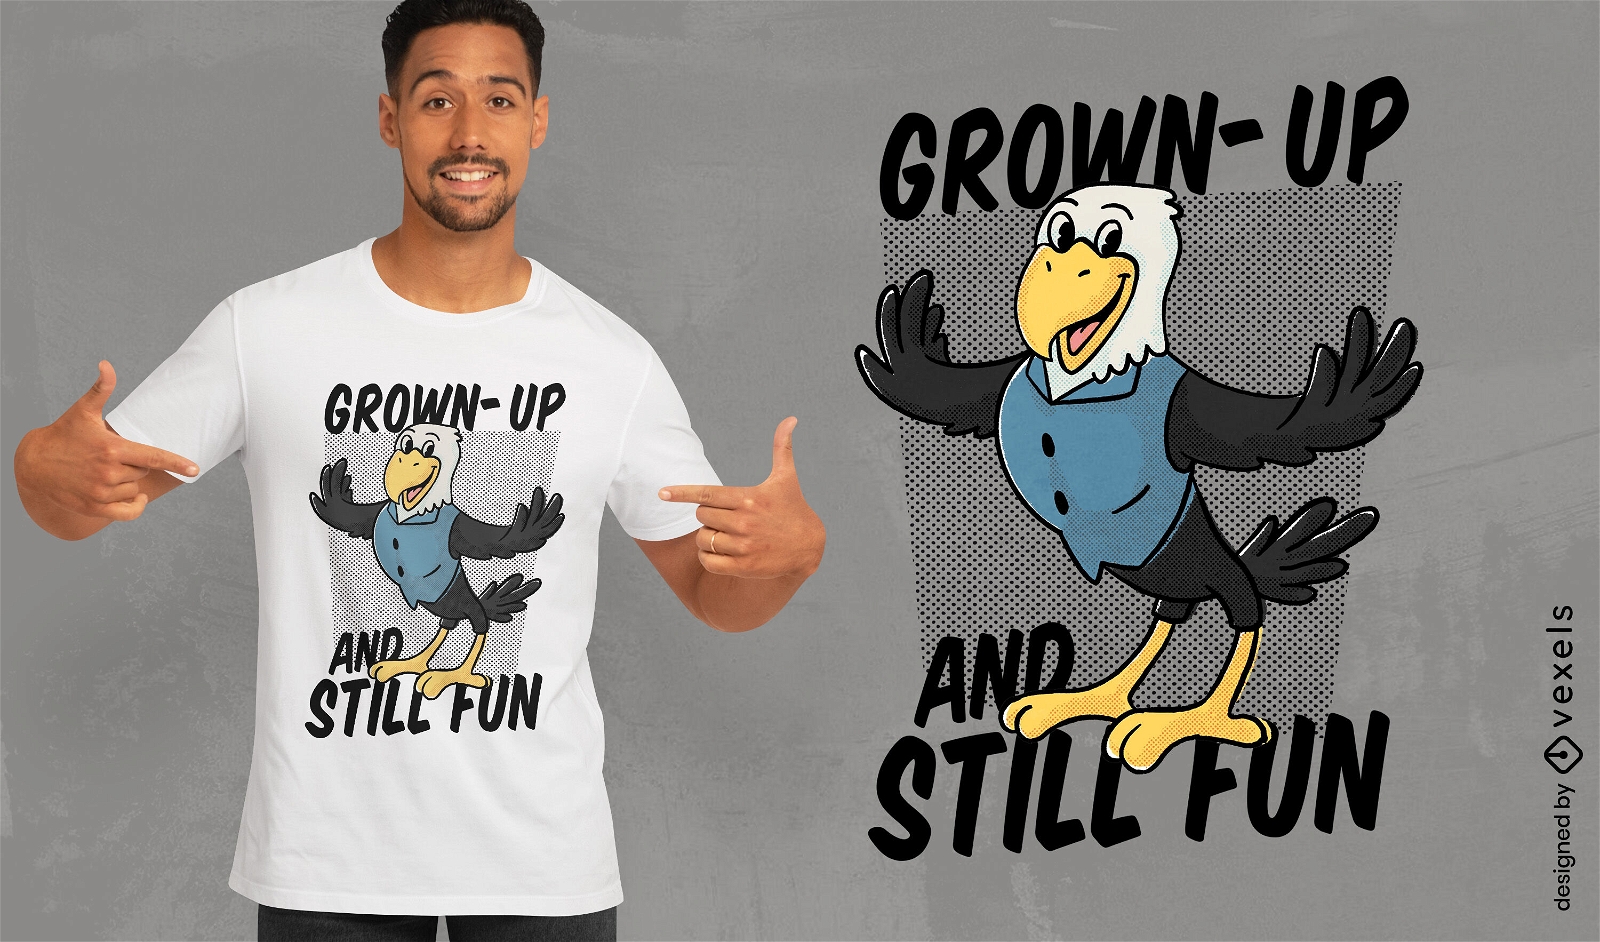 Grown-up fun t-shirt design